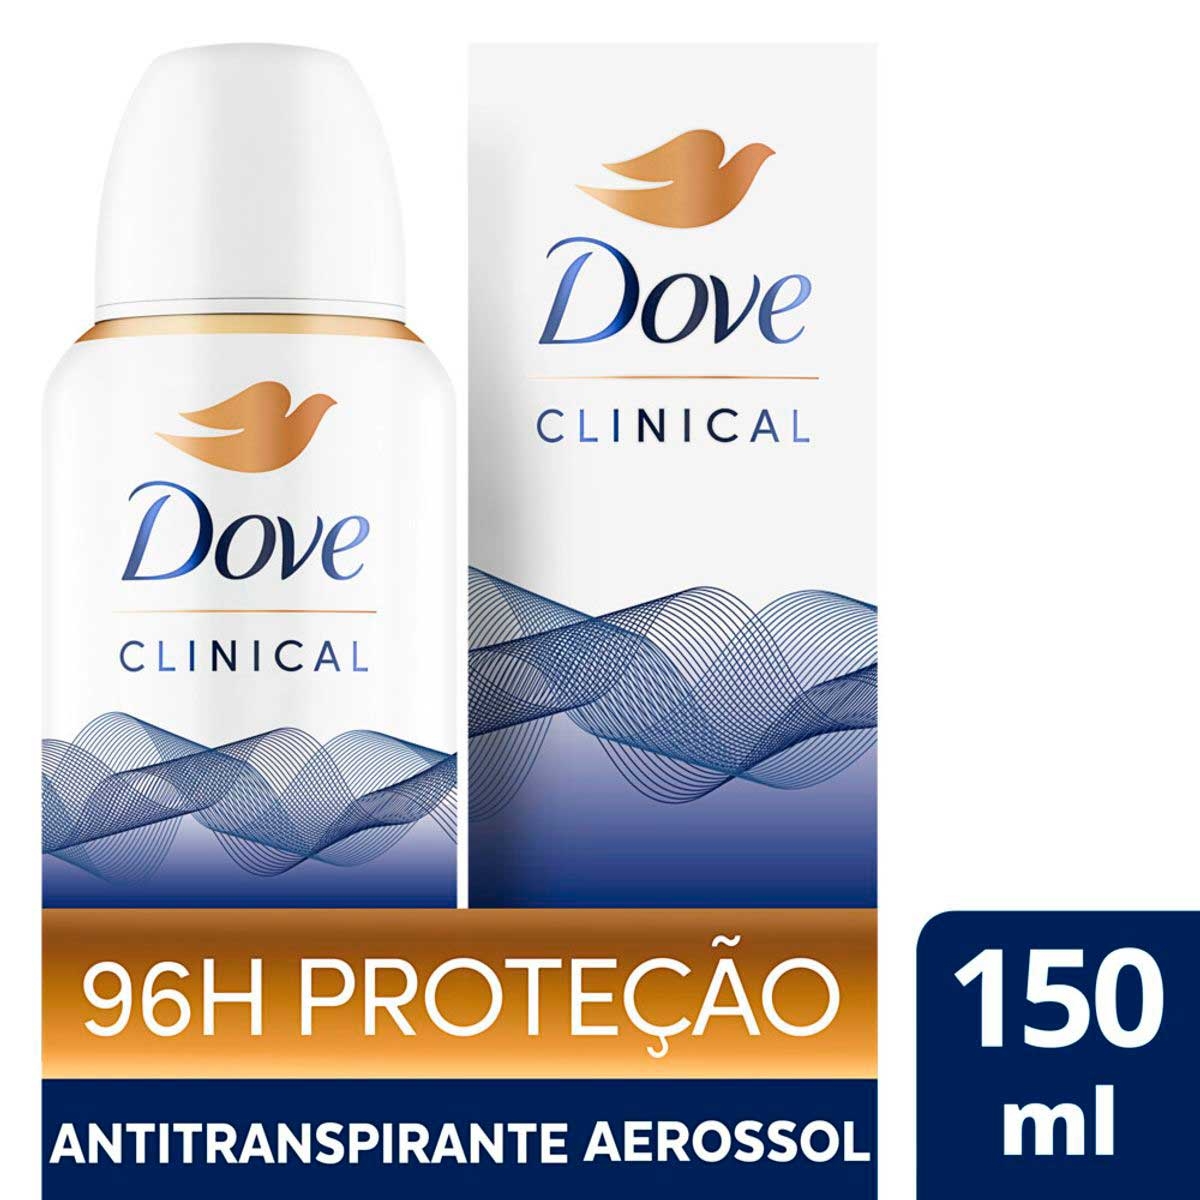 Desodorante Rexona Aerosol Men Clinical Clean 150ml - Kit com 4 Unidades